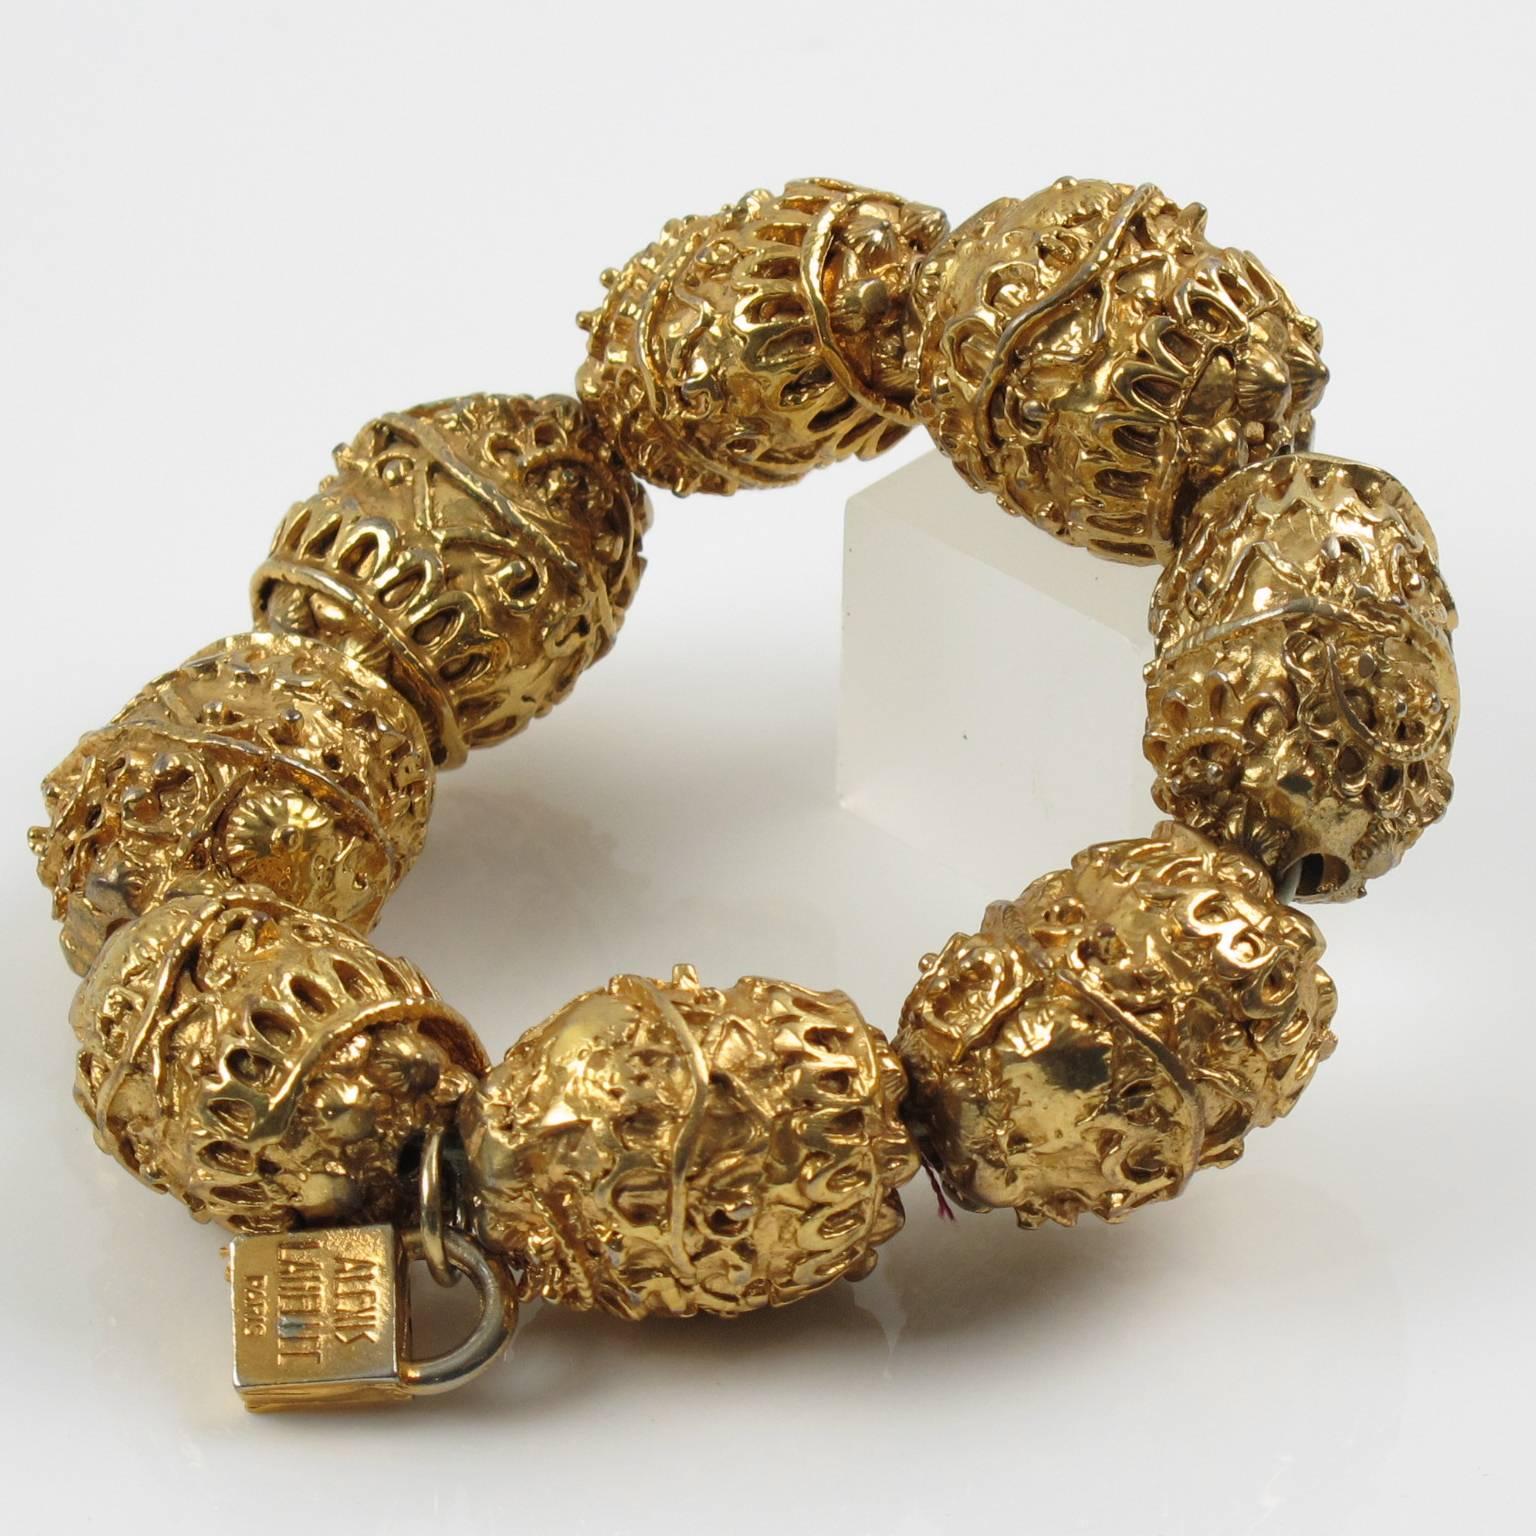 Baroque Revival Rare Alexis Lahellec Paris Signed Stretch Bracelet Gilt Carved Beads